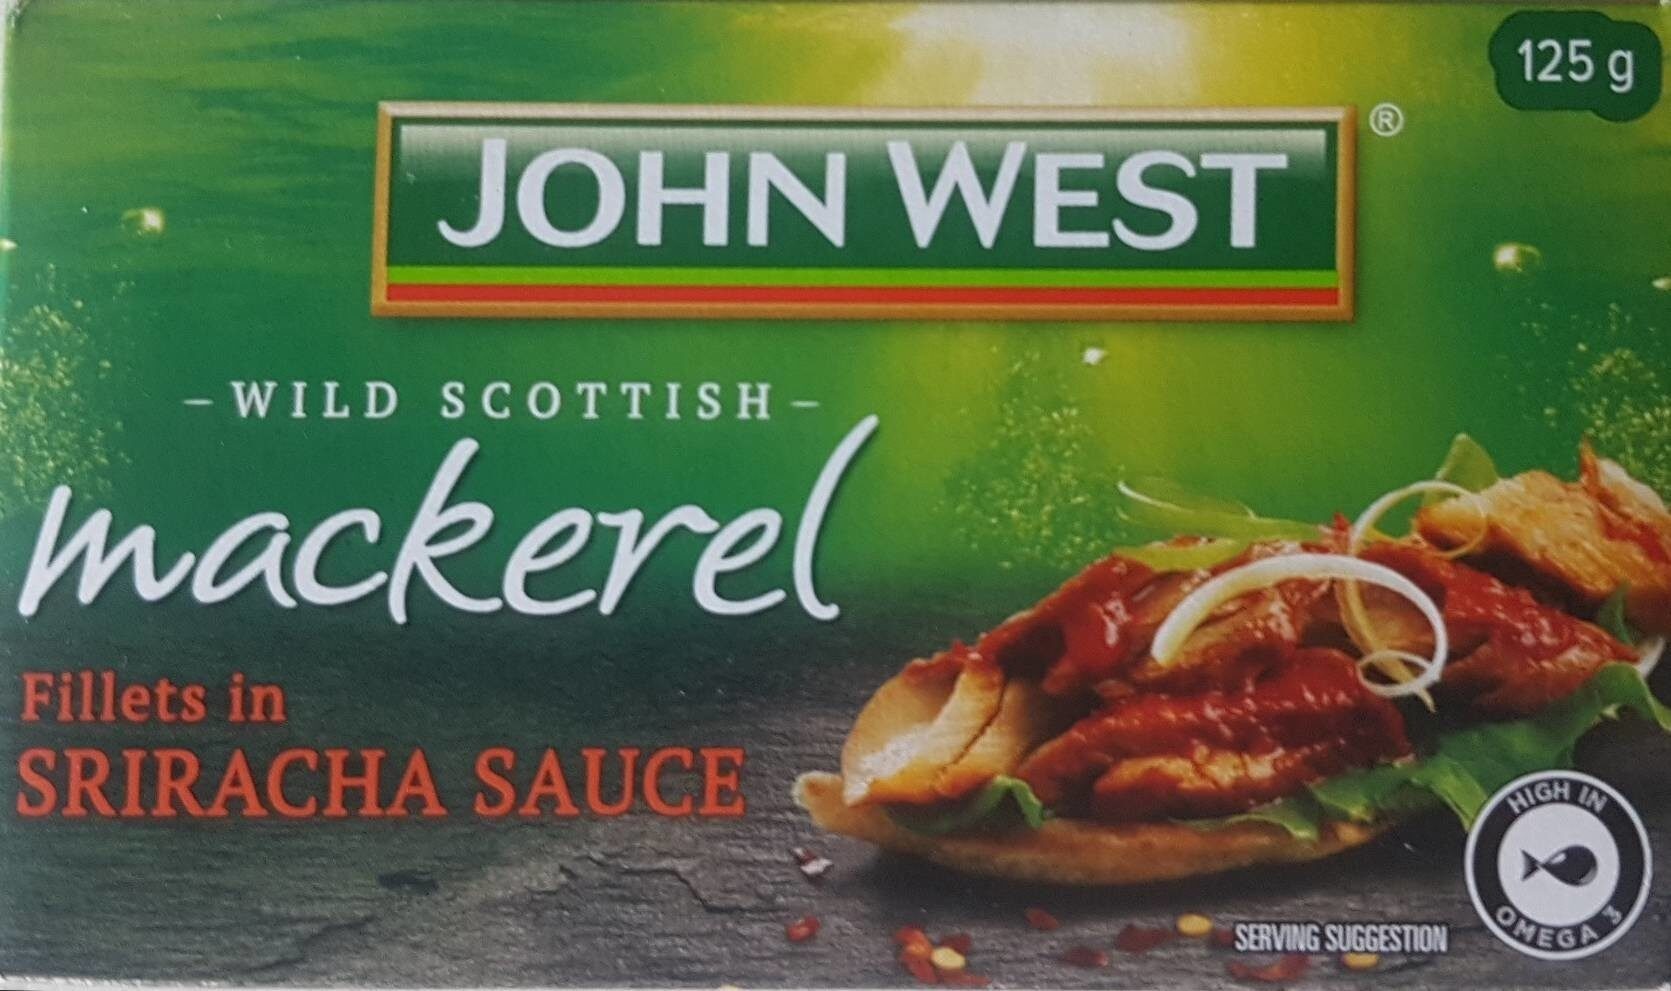 Mackerel Fillets in Sriracha Sause - Product